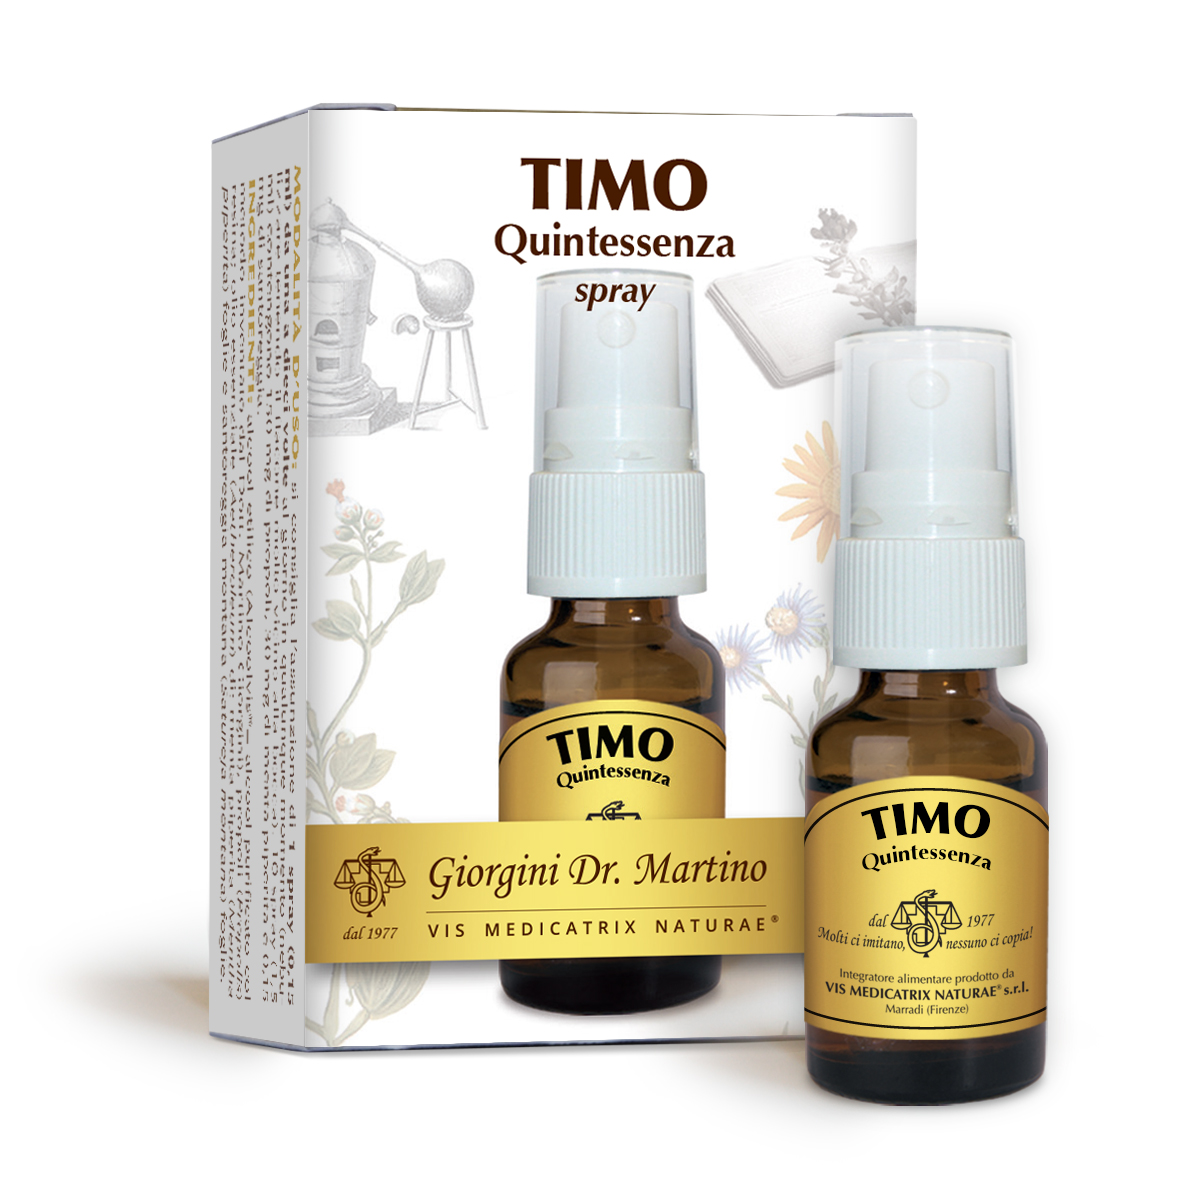 TIMO Quintessenza 15 ml spray